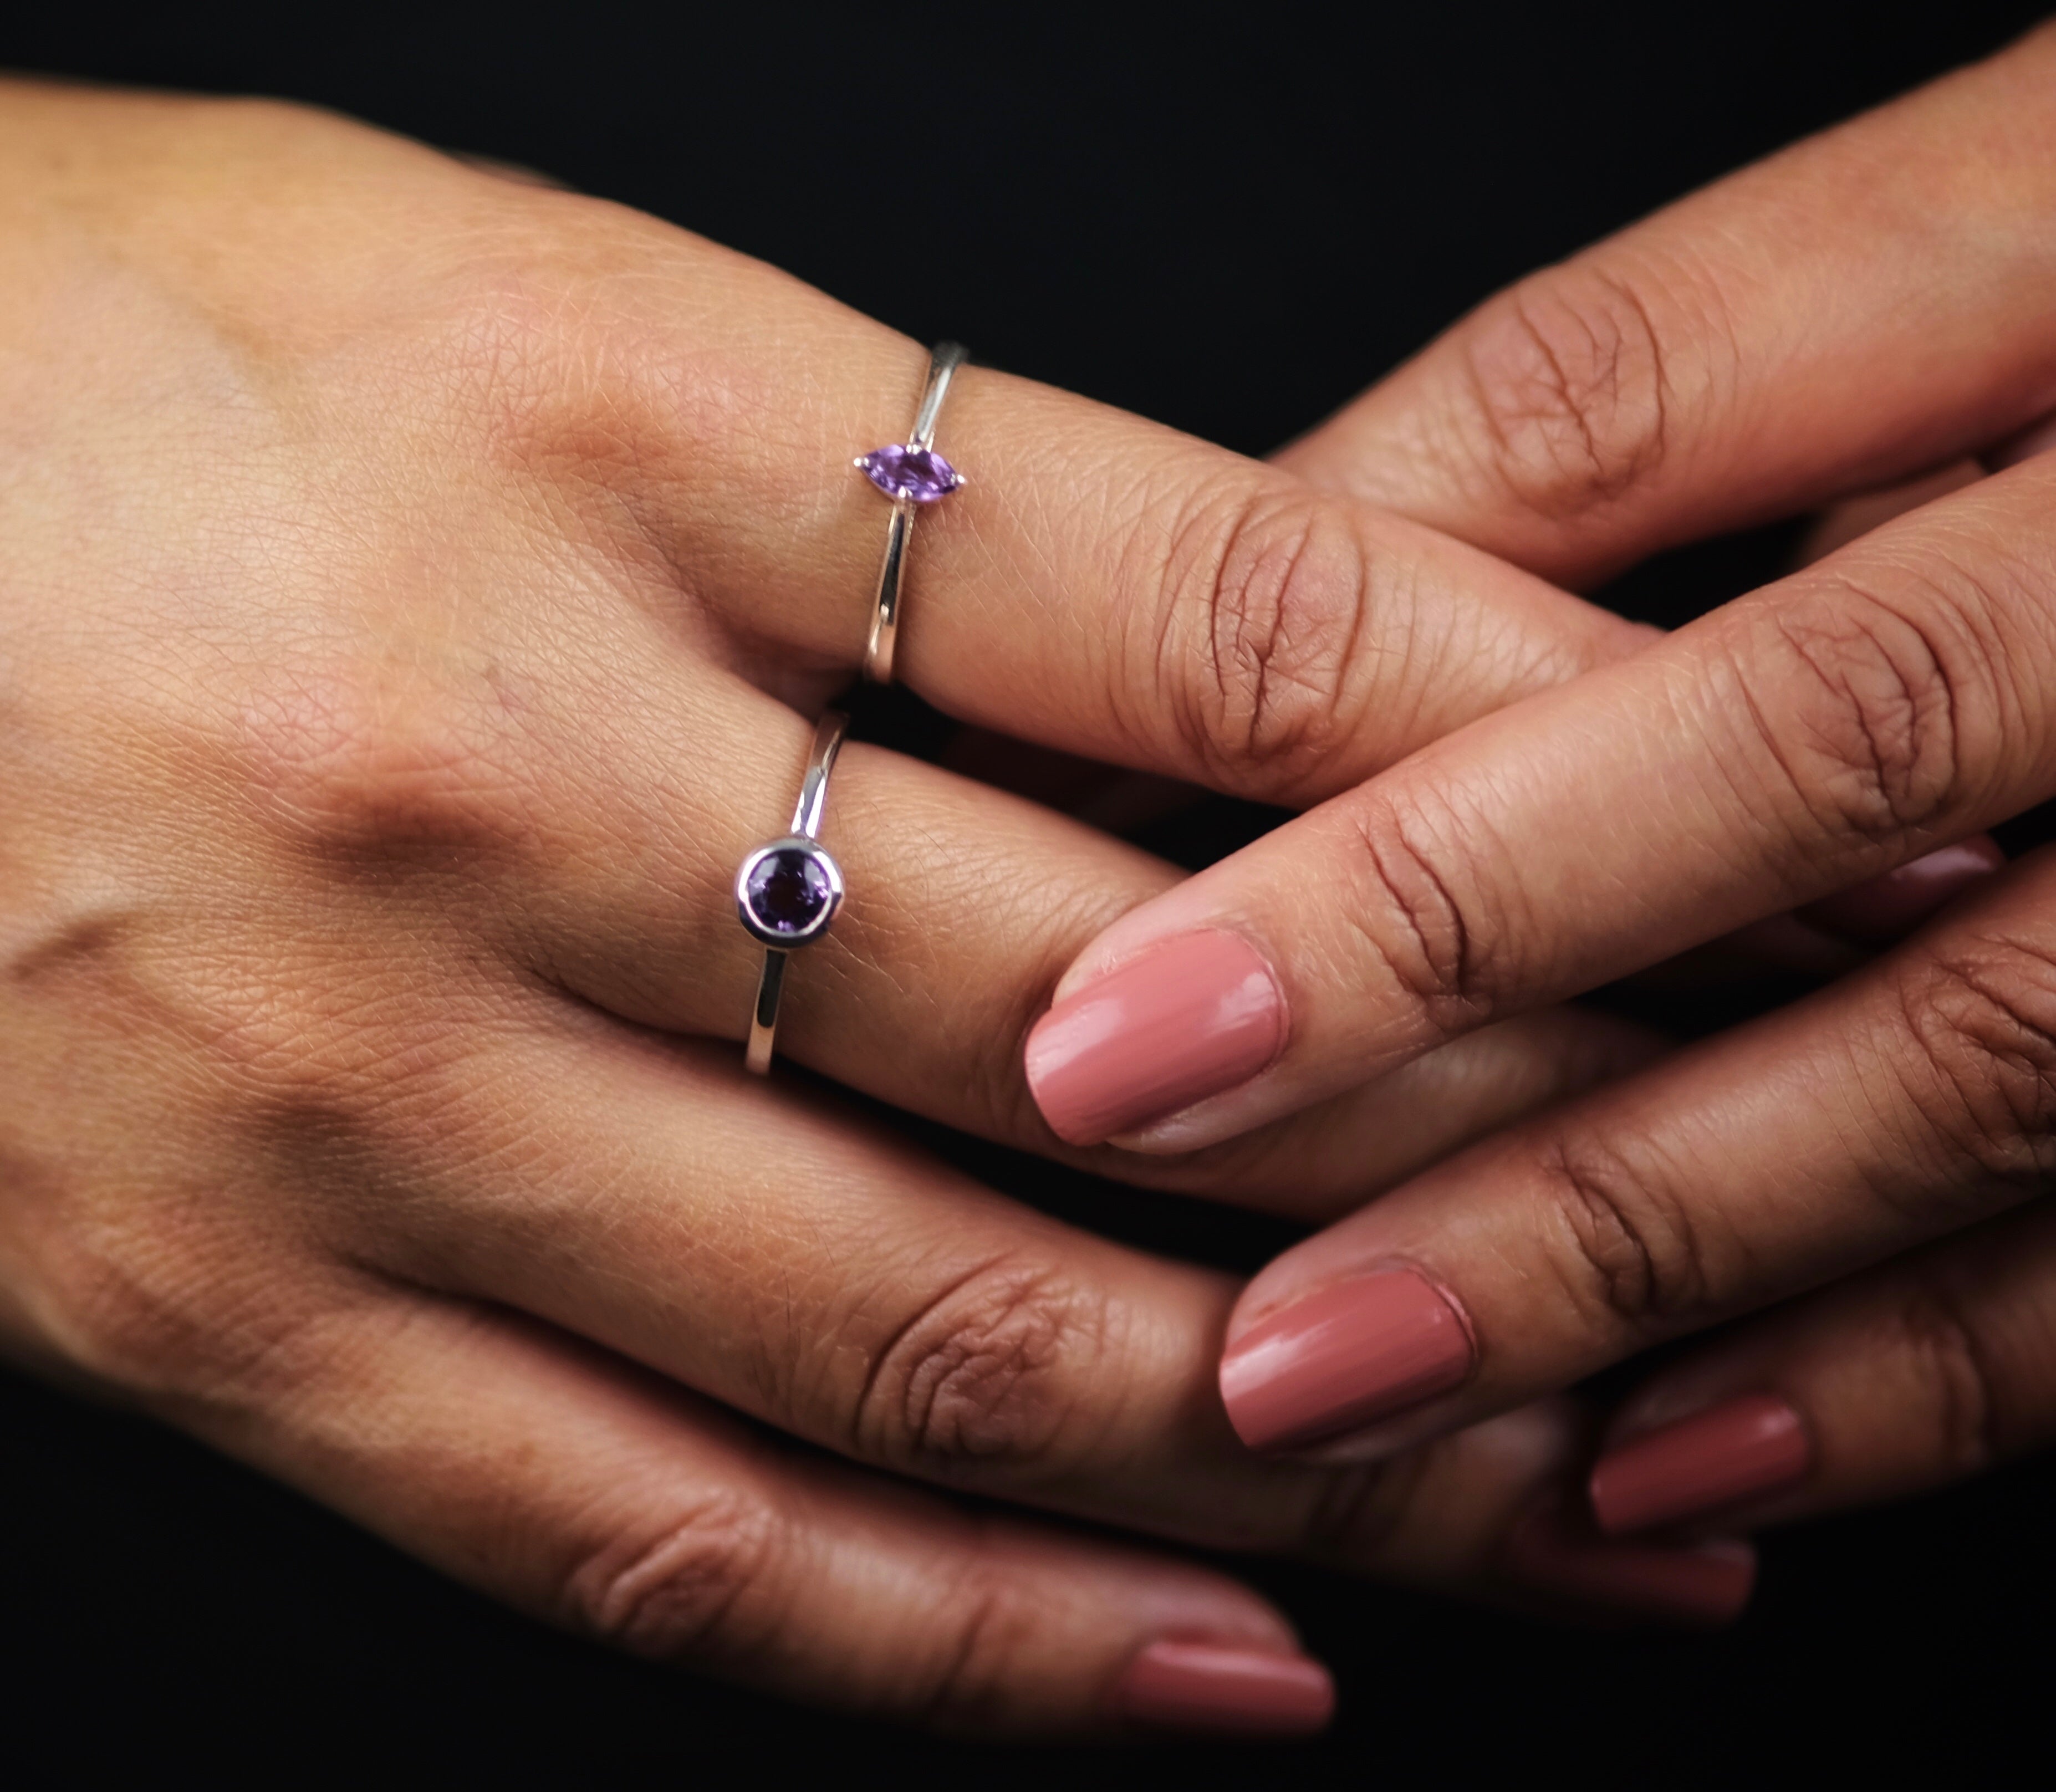 A model wearing two amethyst gemstone rings